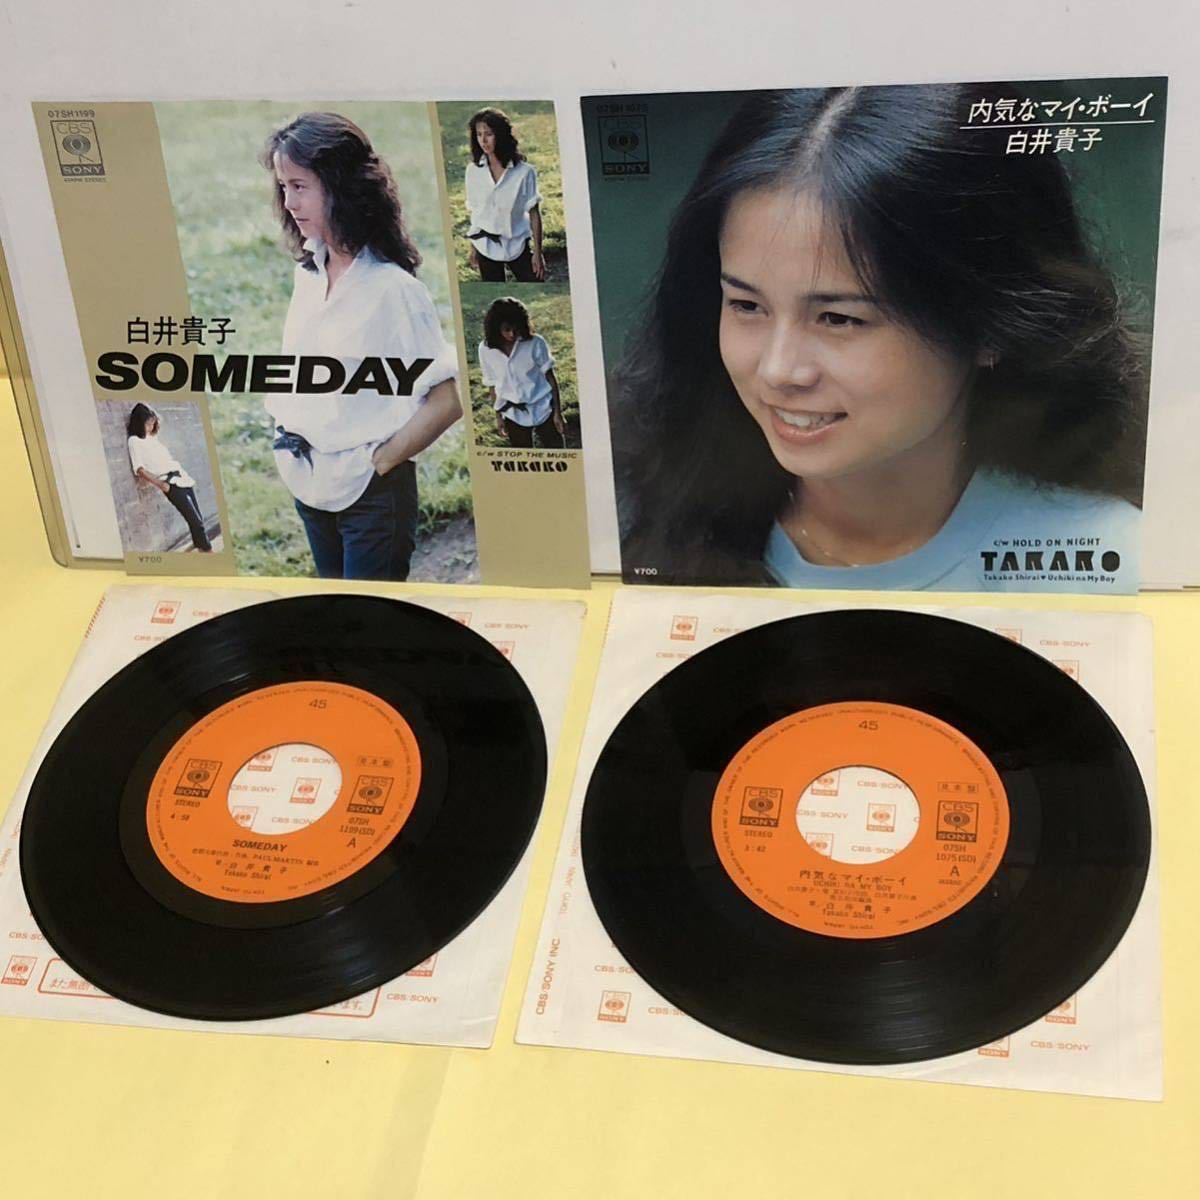 0 Shirai Takako EP5 sheets ( sample record 3 sheets ) set ①( sample ) good ..Sunshine ②( sample ) SOMEDAY ③( sample ) inside .. my Boy ④ CHANCE! ⑤ Princess TIFFA